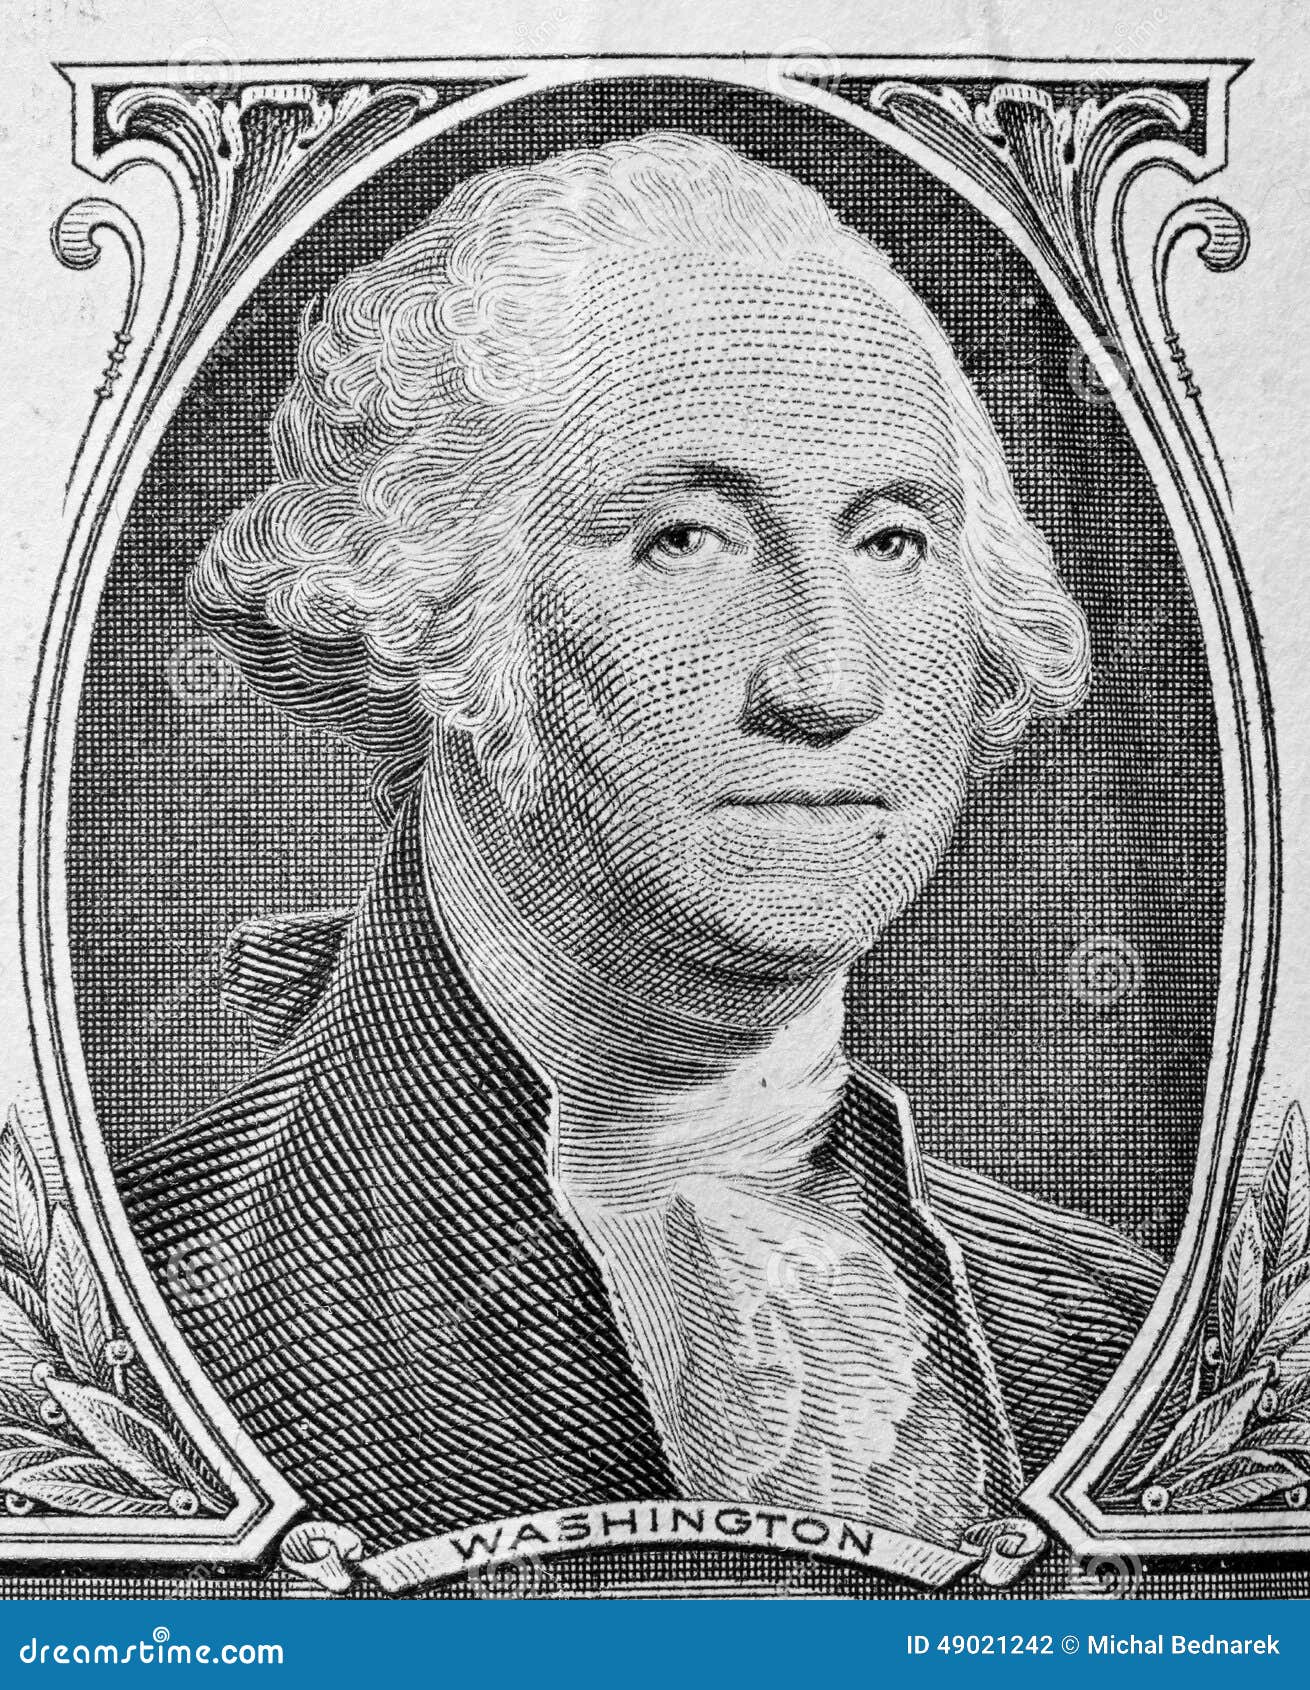 1 124 George Washington One Dollar Photos Free Royalty Free Stock Photos From Dreamstime